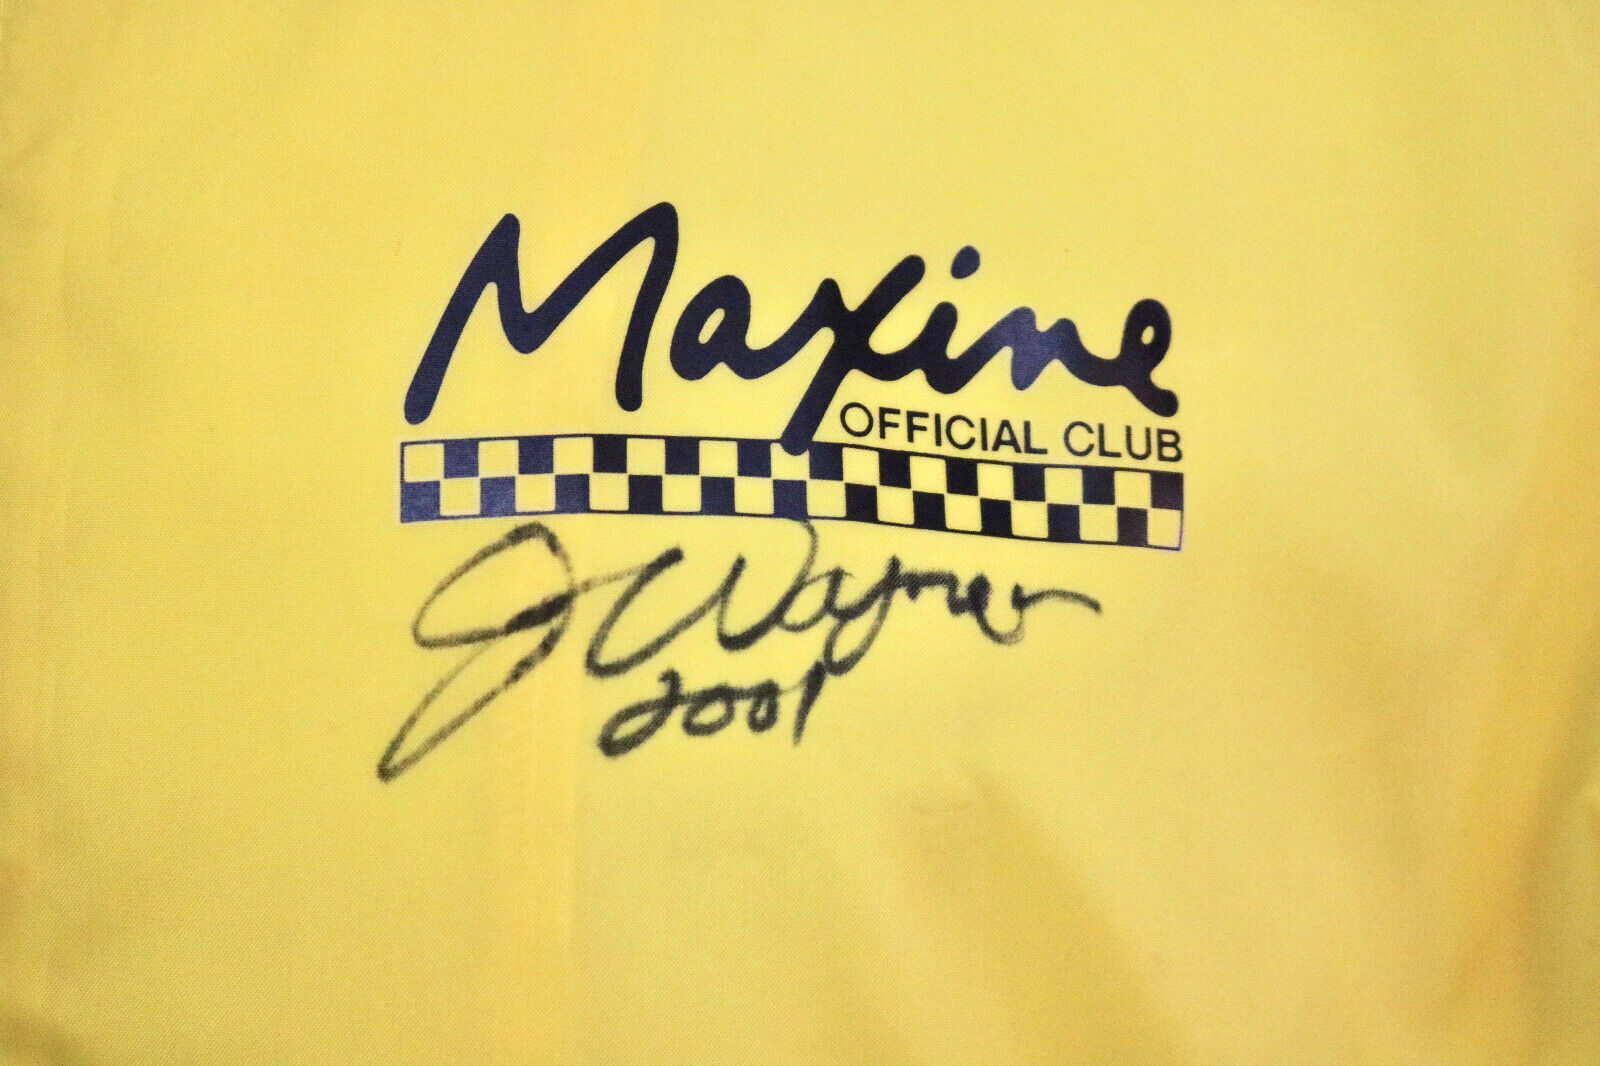 Maxine Club Hallmark windbreaker jacket XL signed by creator artist John Wagner